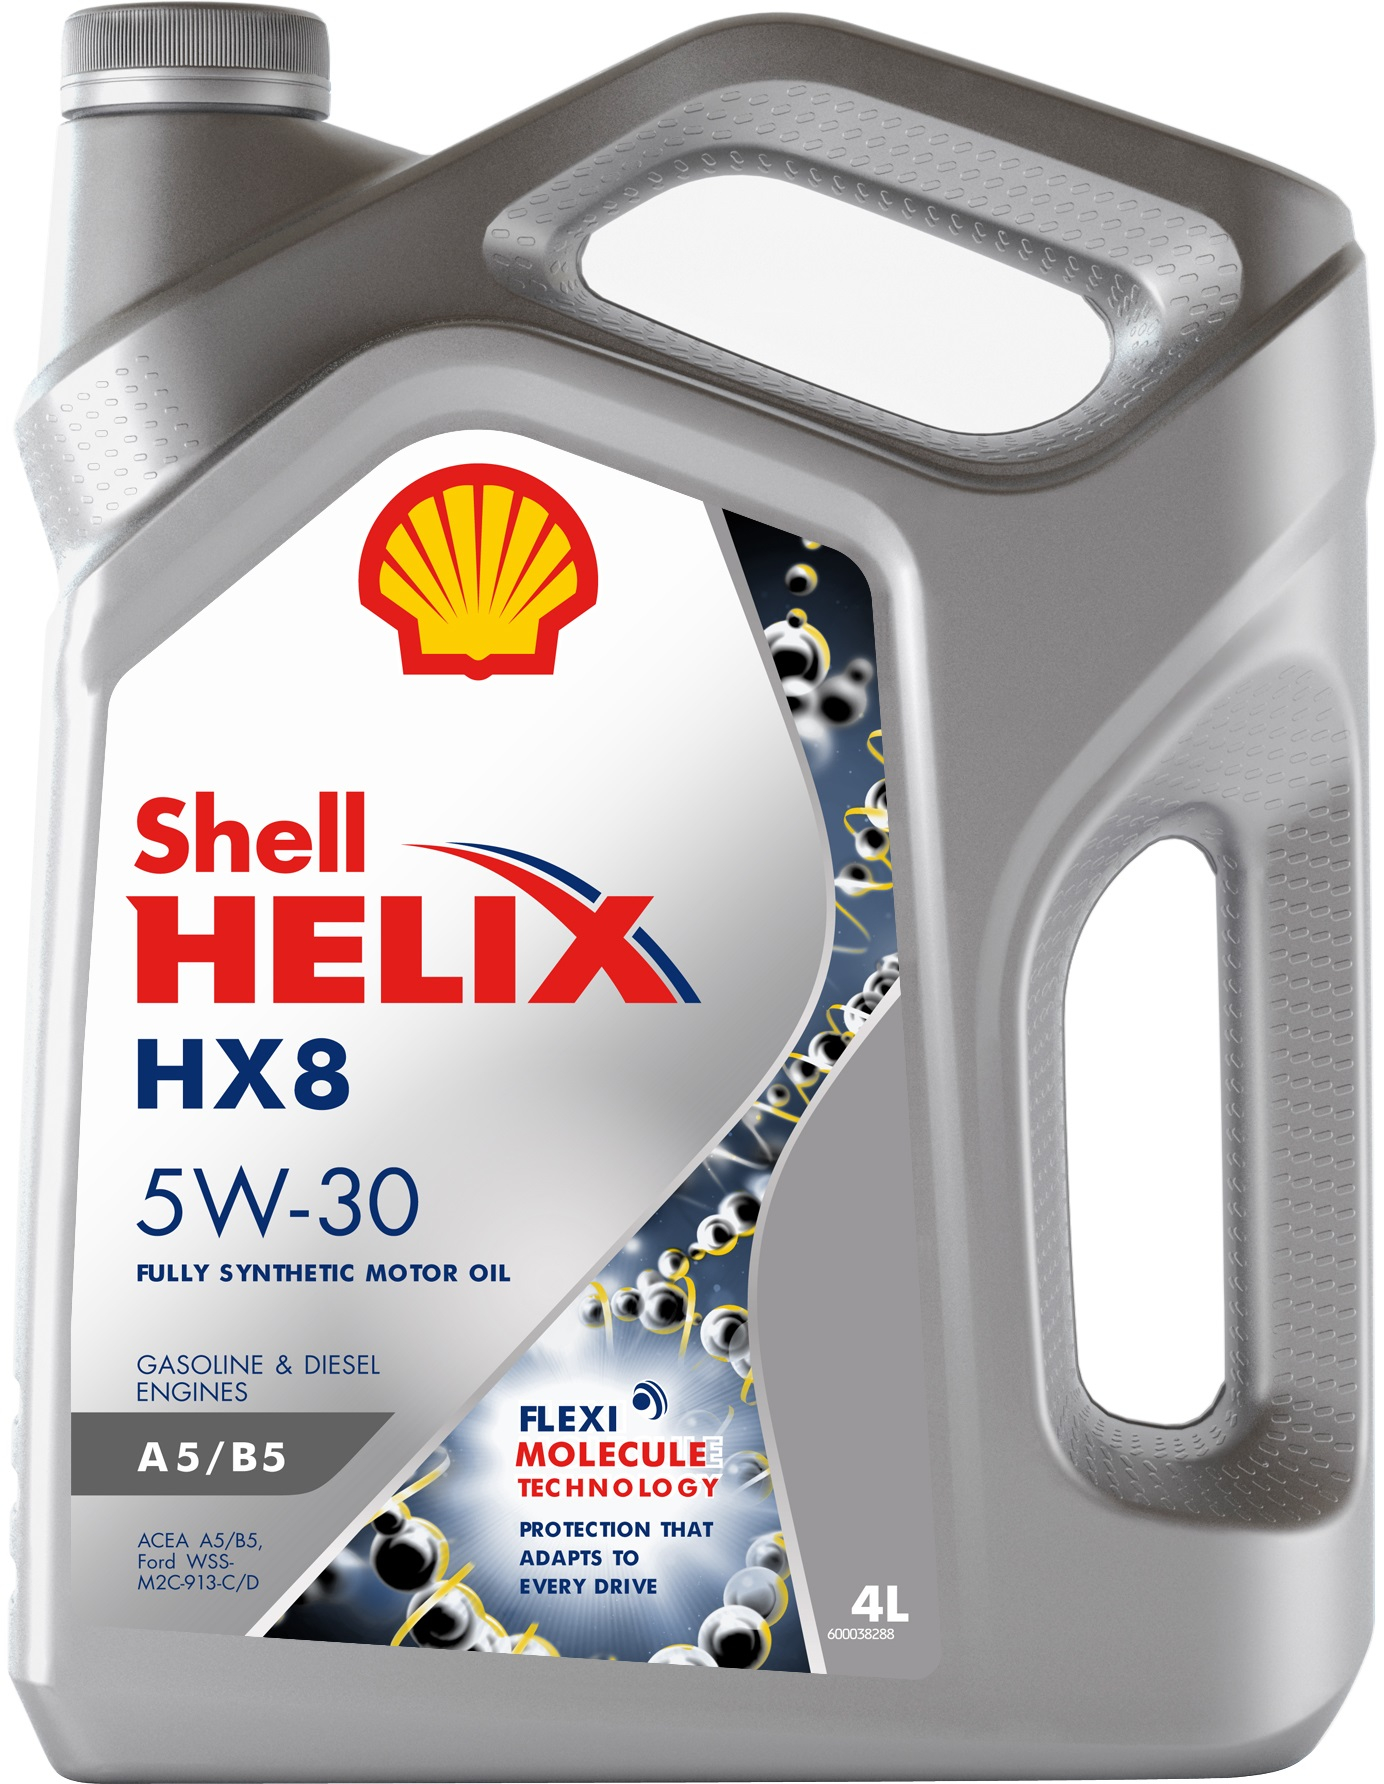 Моторное масло Shell Helix HX8 А5/B5 5W-30, 550046777, 4л